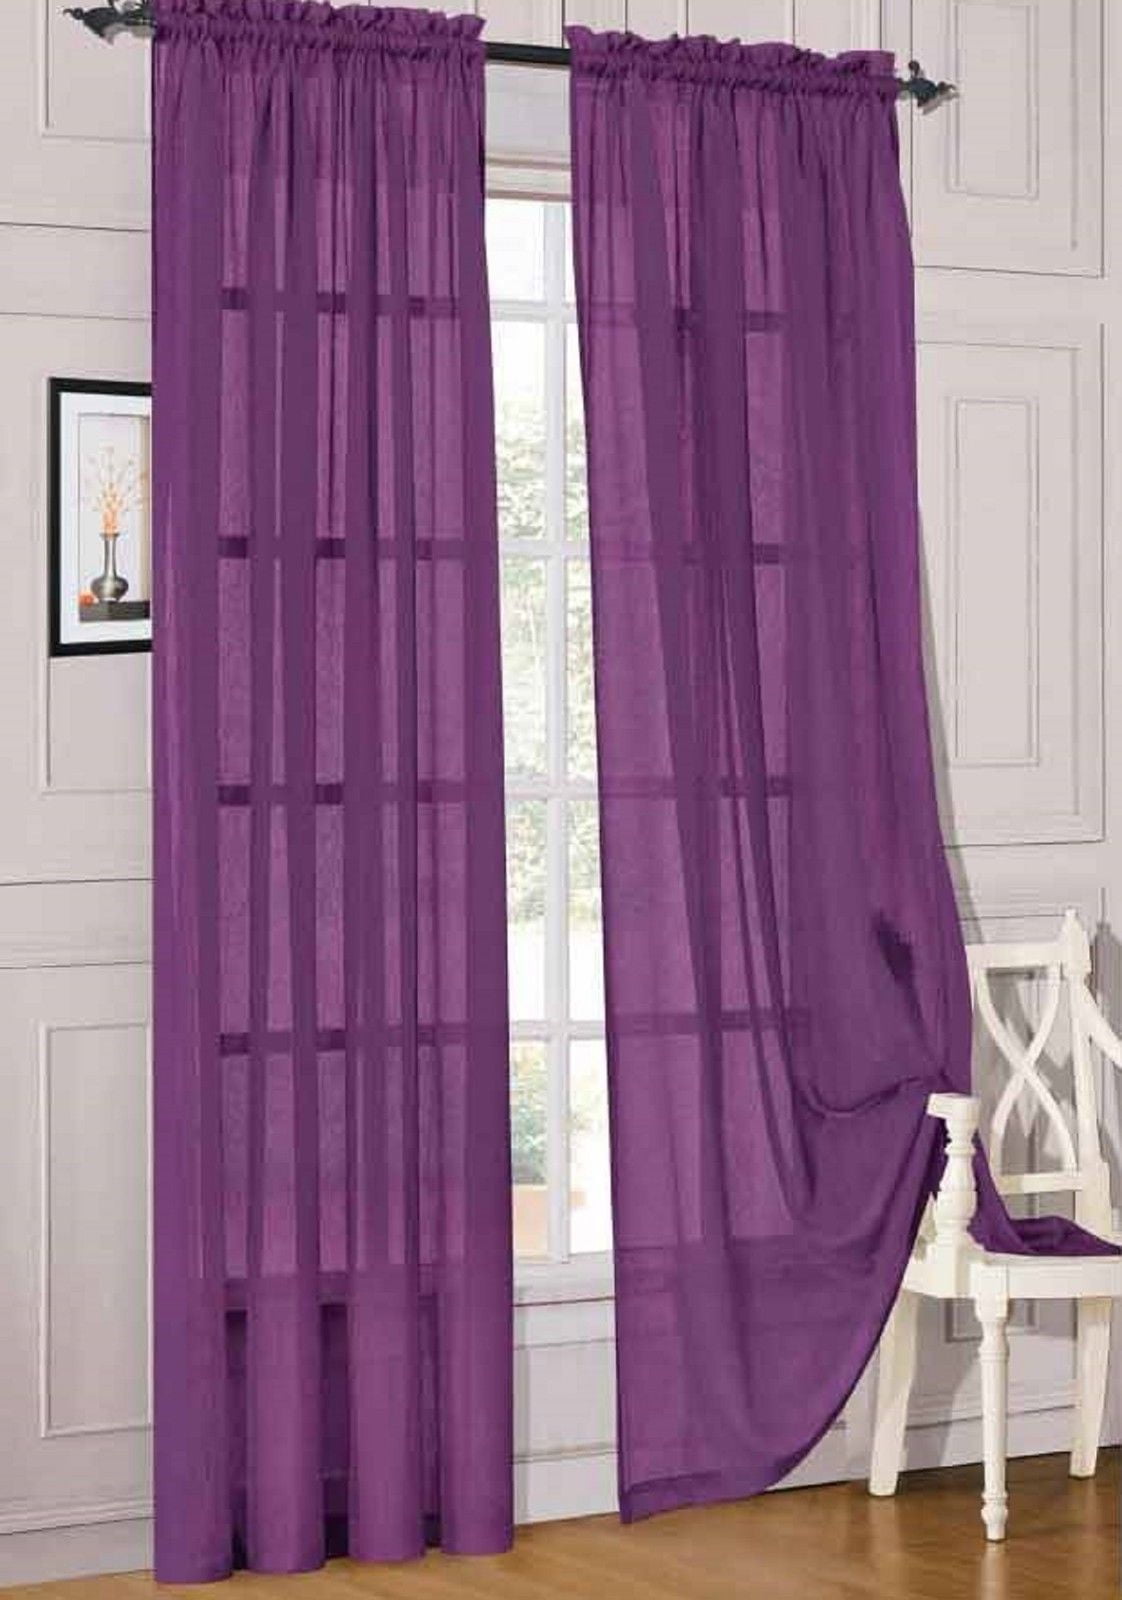 1 SET Purple SOLID VERSATIL ROD POCKET WINDOW CURTAIN VOILE SHEER PANELS 